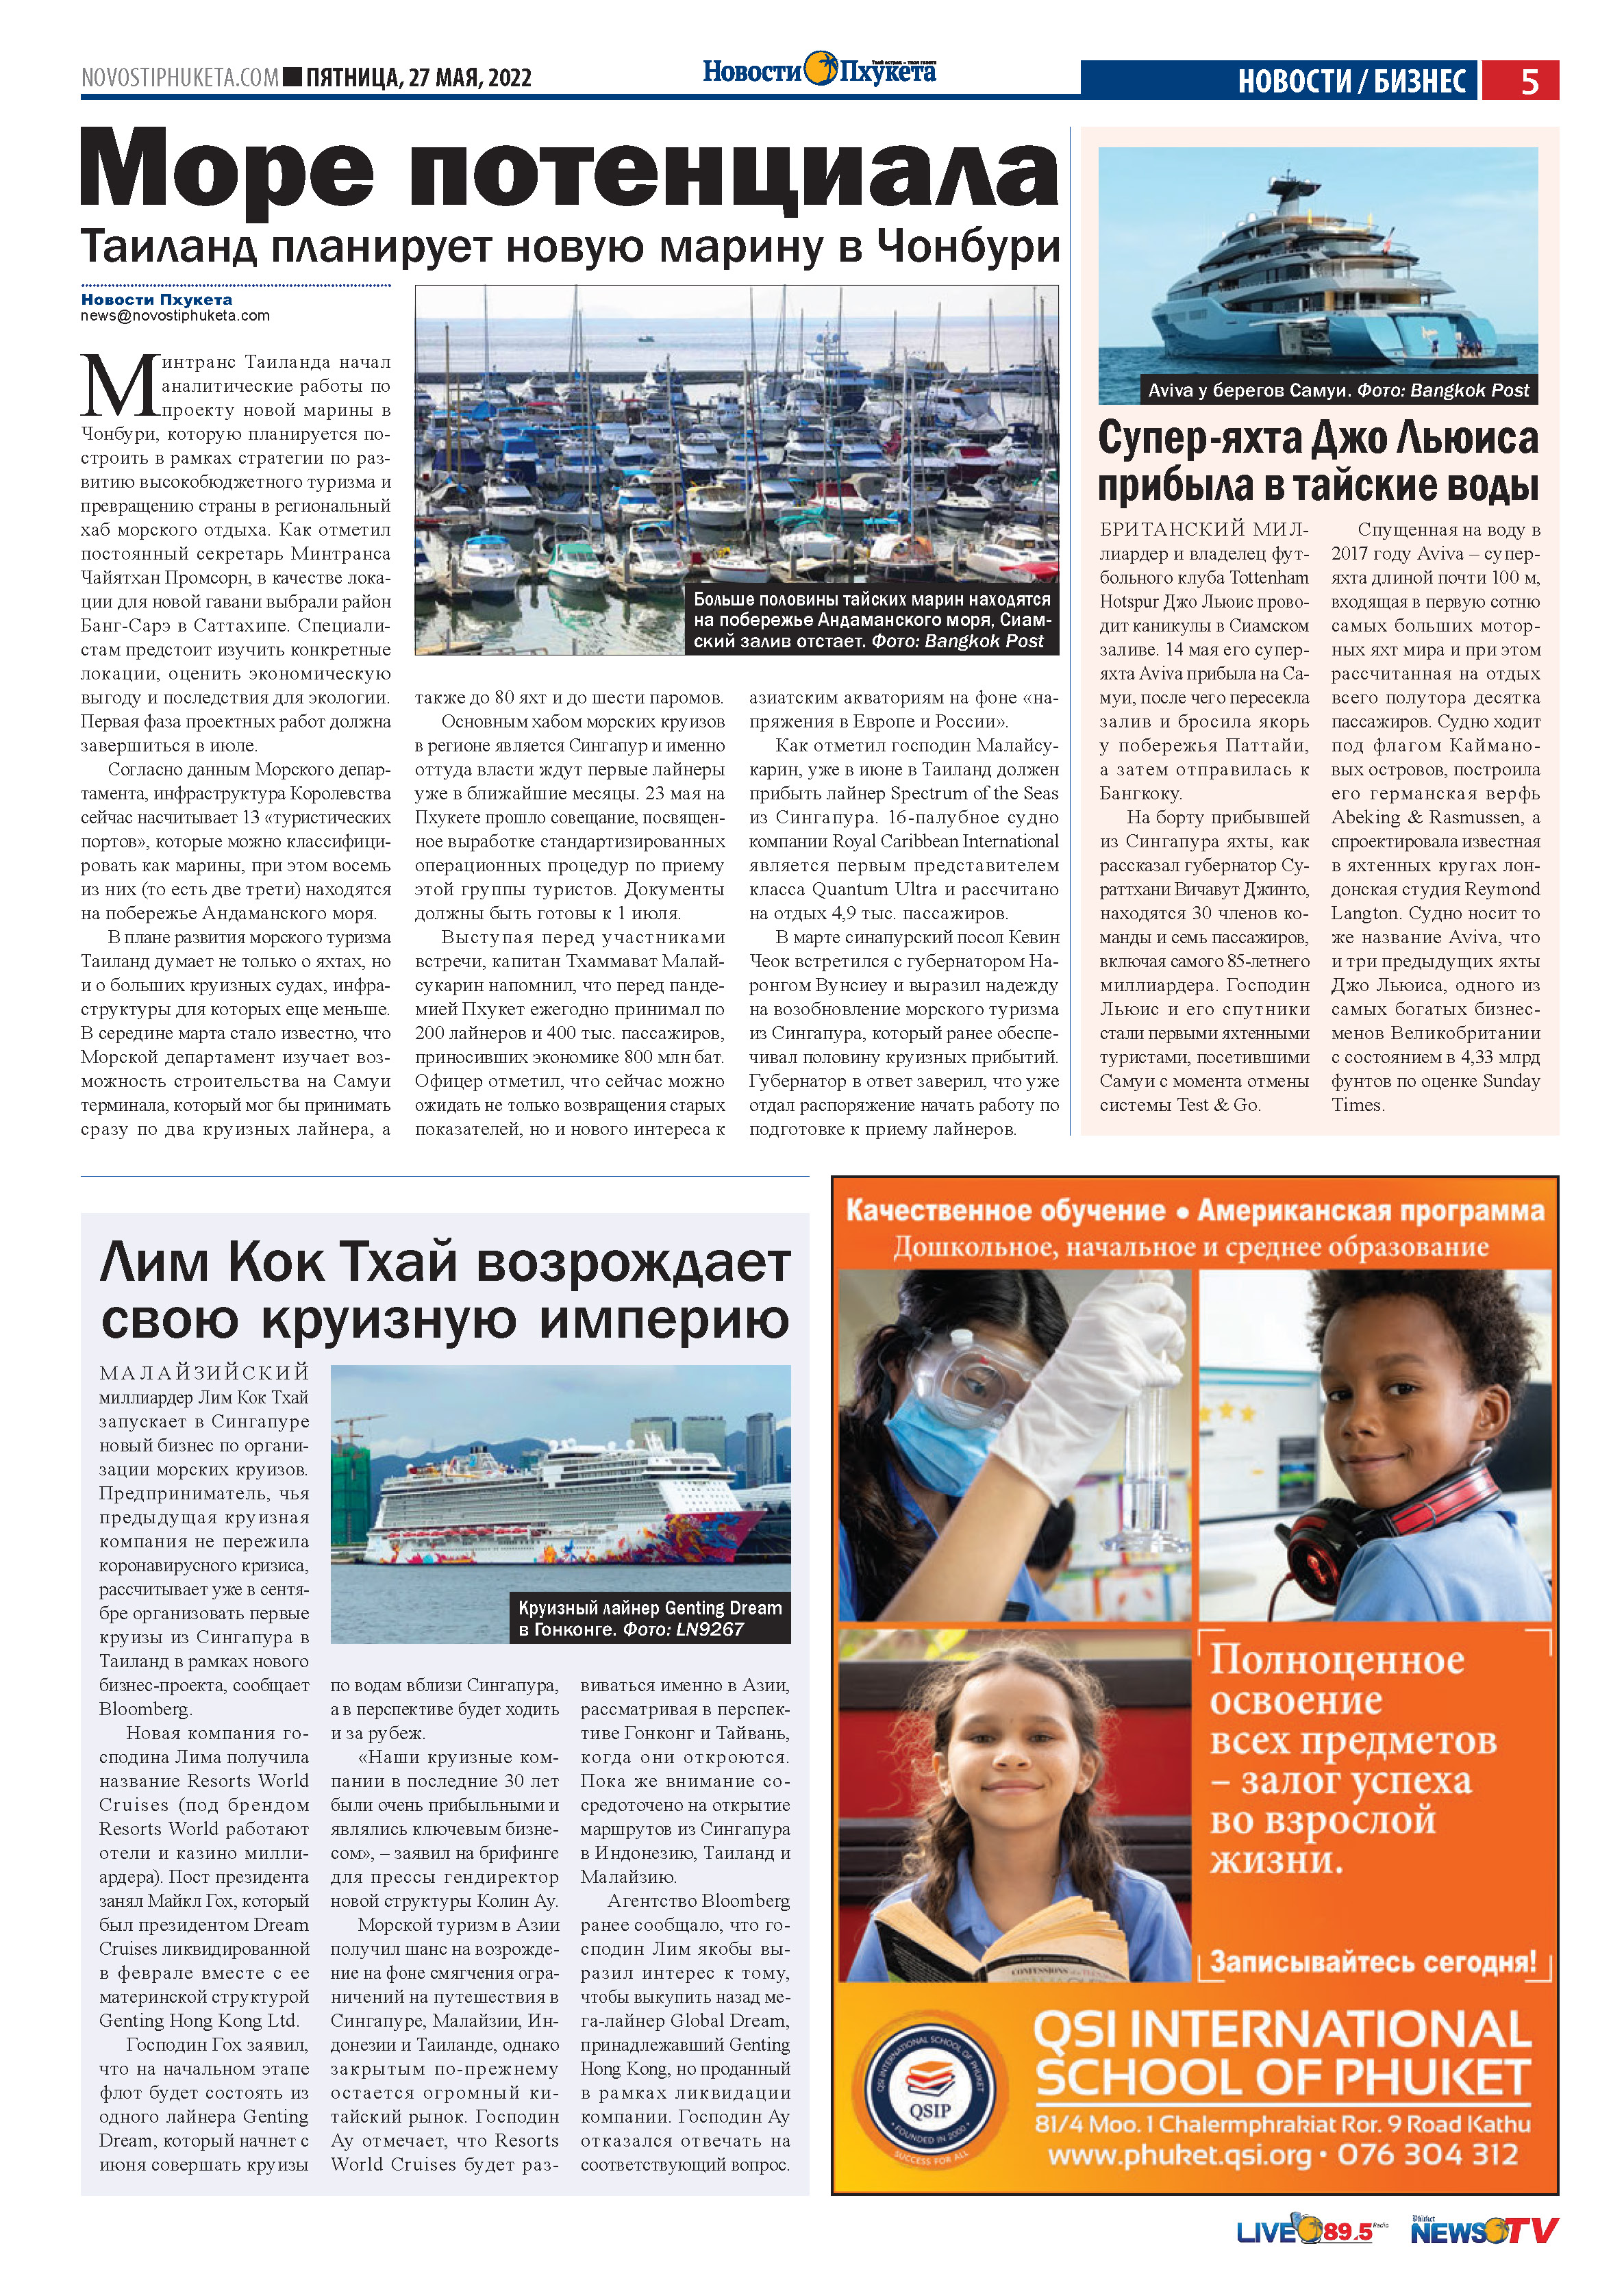 Phuket Newspaper - https://www.novostiphuketa.com/archive/27-05-2022/27-05-2022_Page_05.jpg